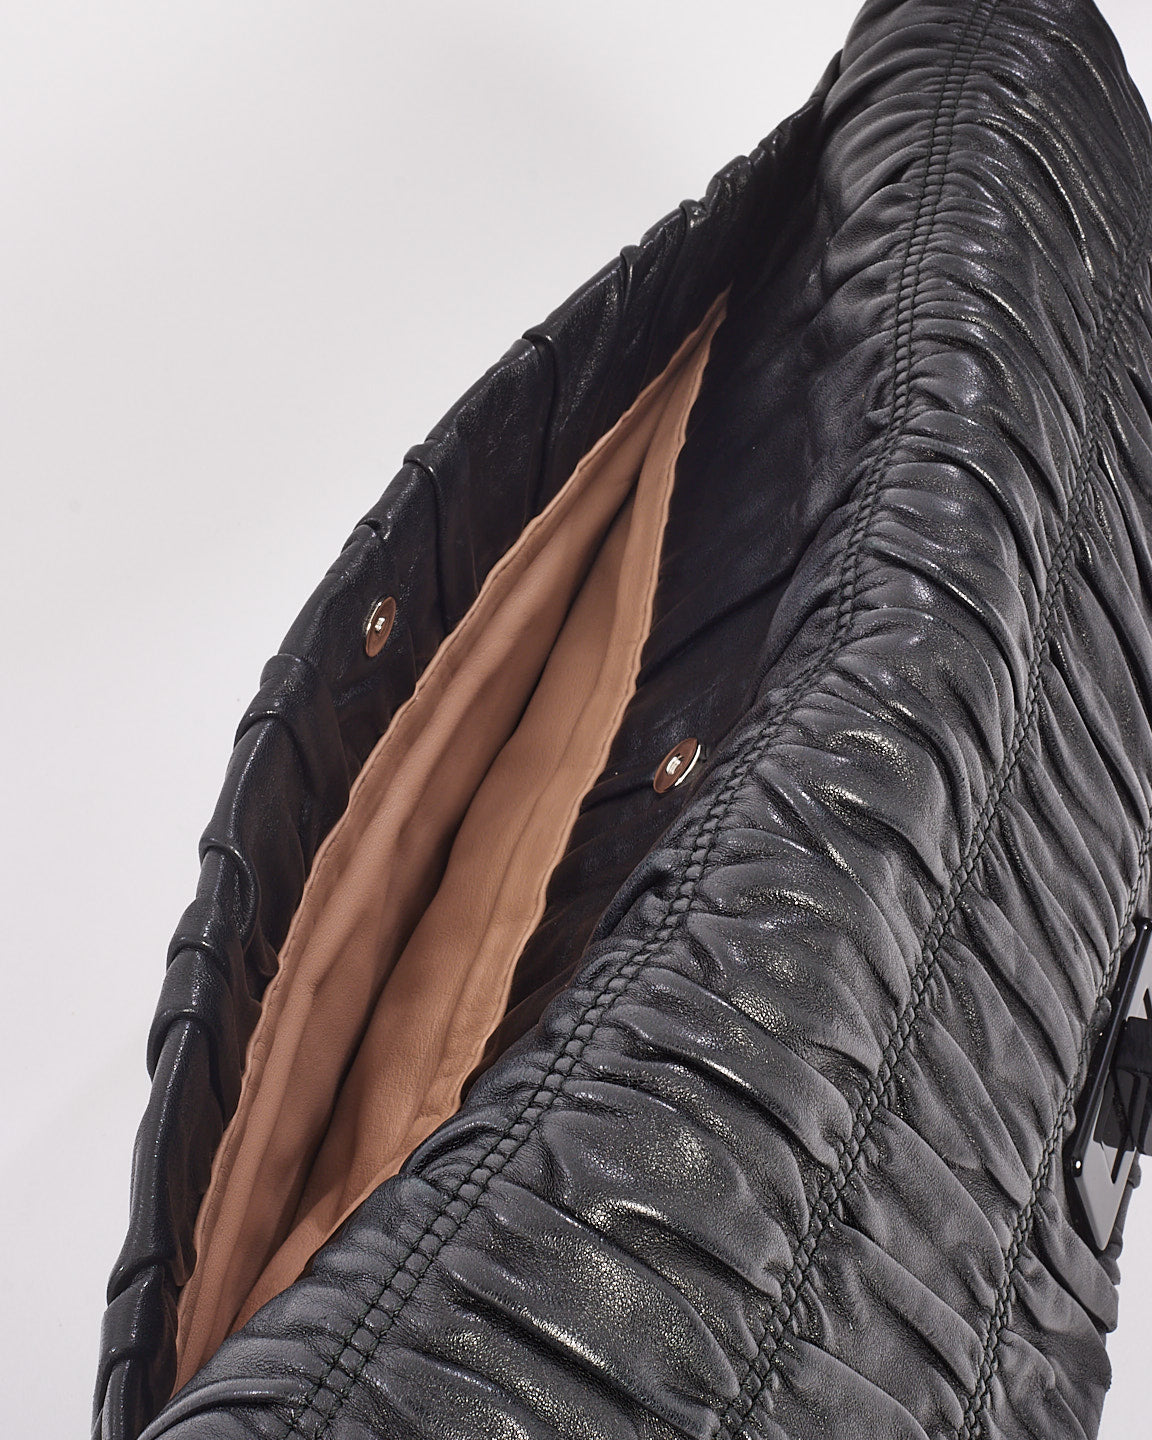 Prada Black Nappa Gaufre Leather Large Flap Clutch